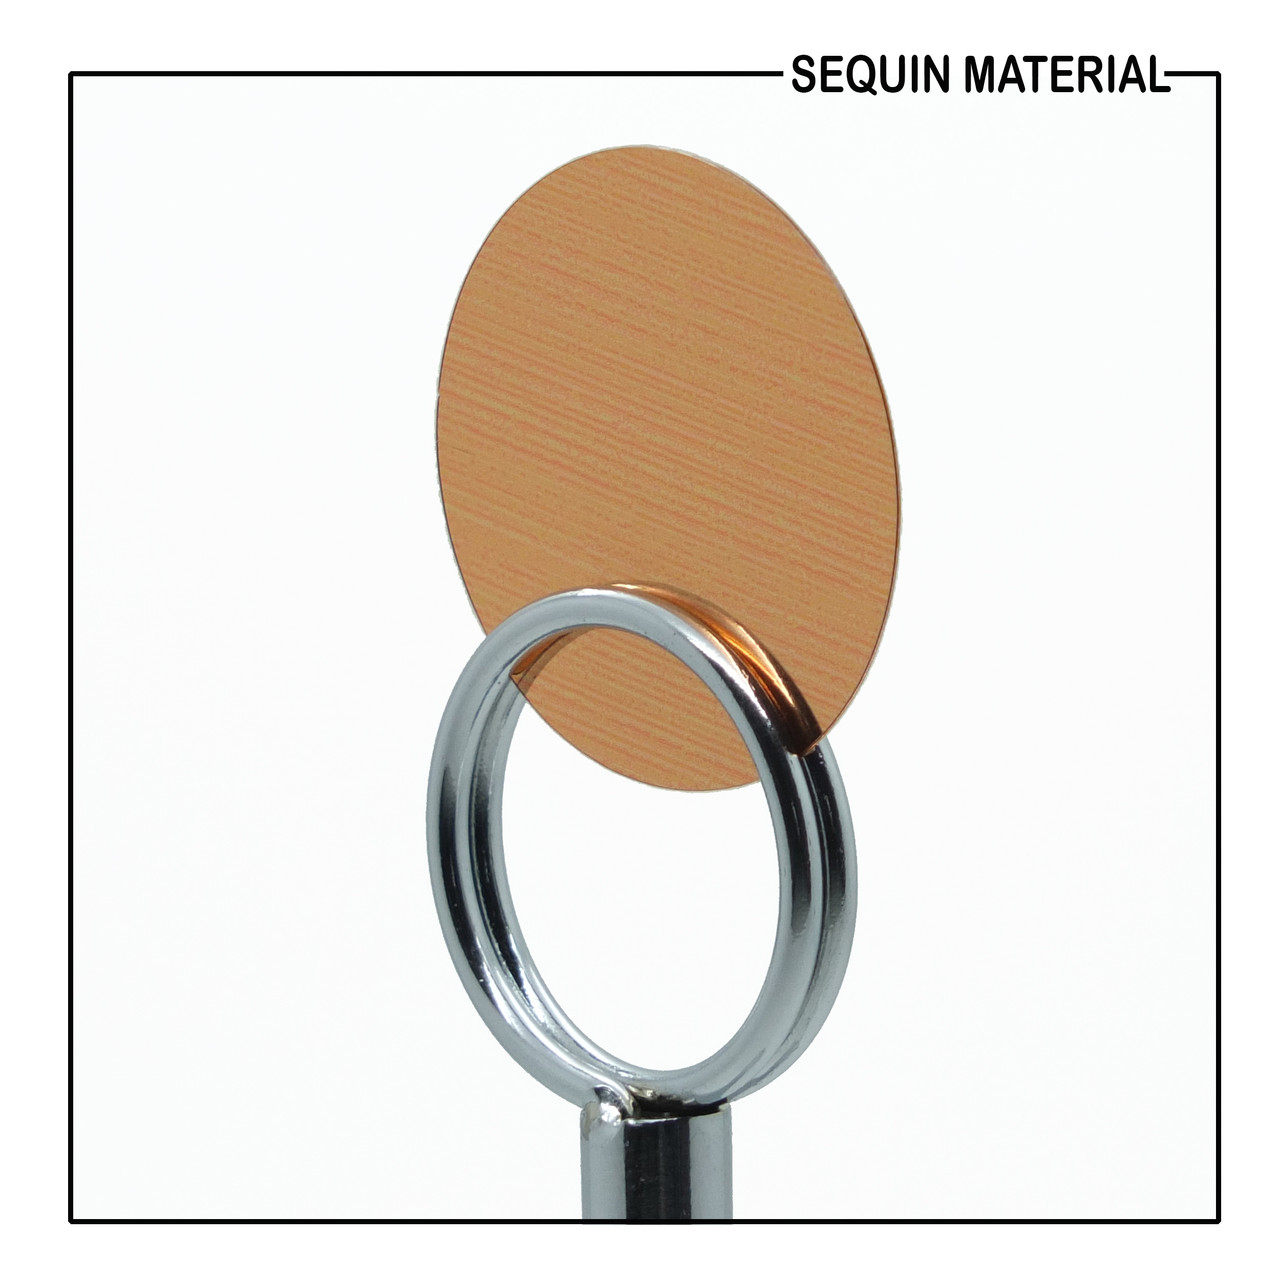 SequinsUSA Pale Copper Metallic Shiny Sequin Material  RL808